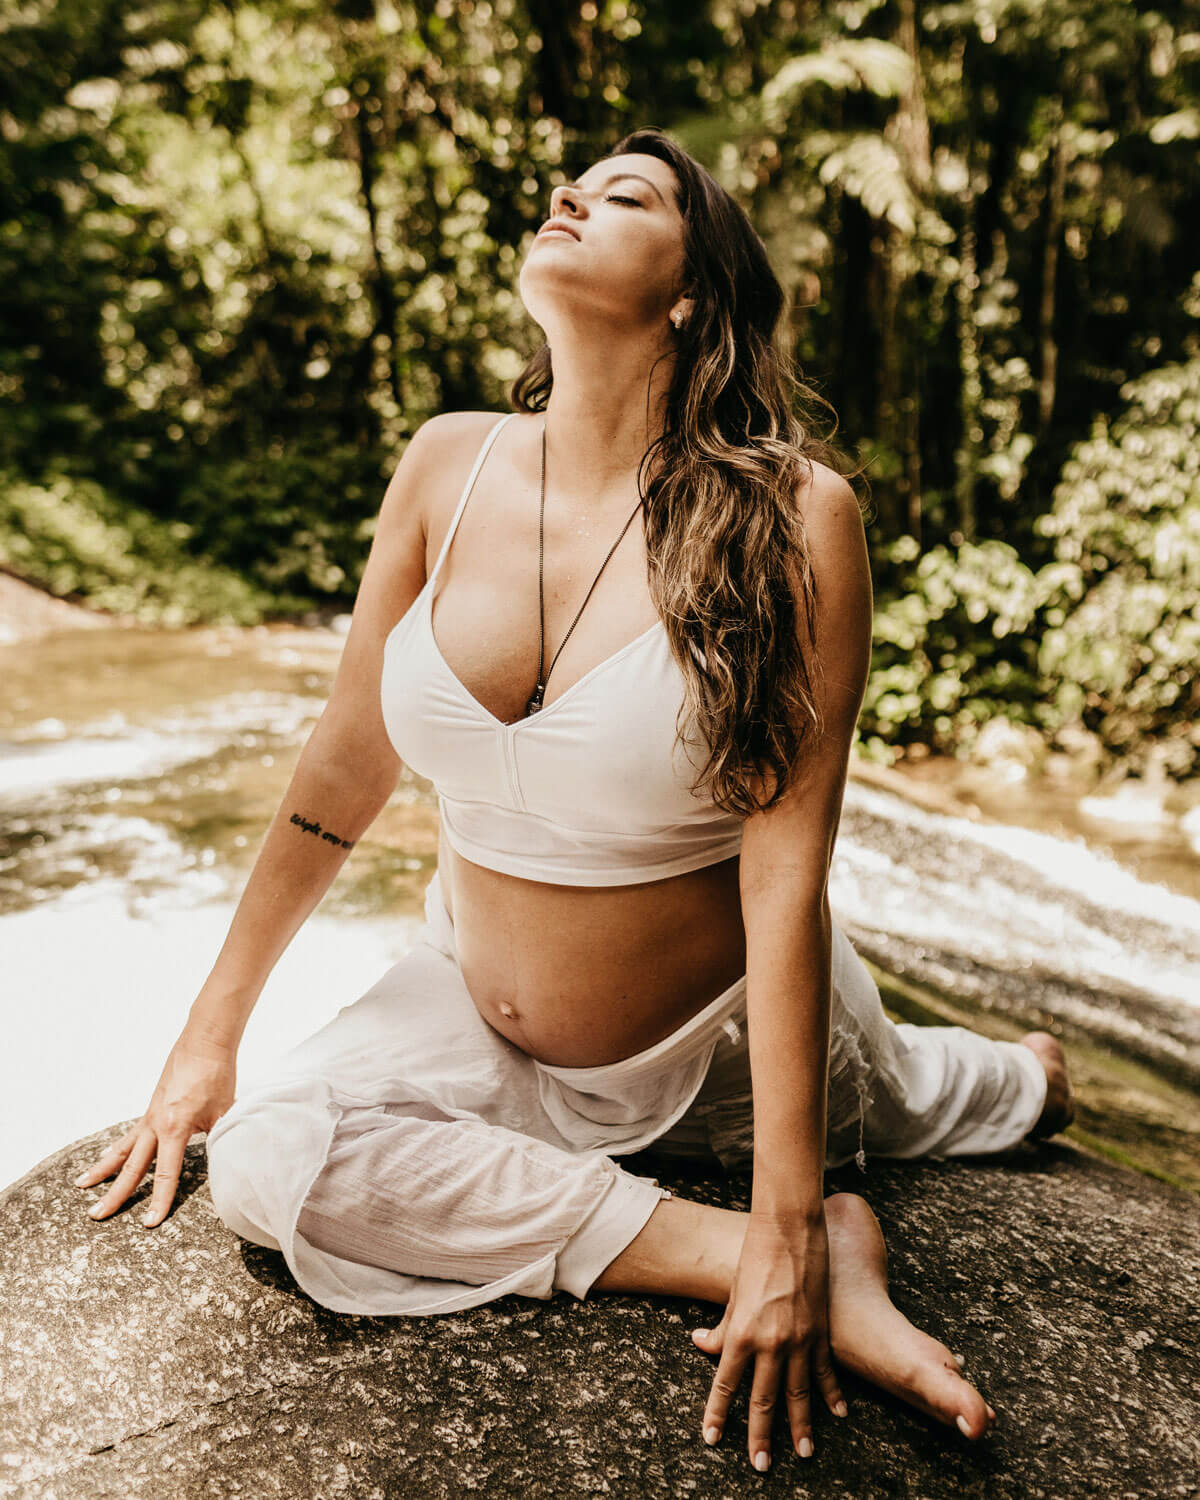 Yoga Inversions for Pregnancy